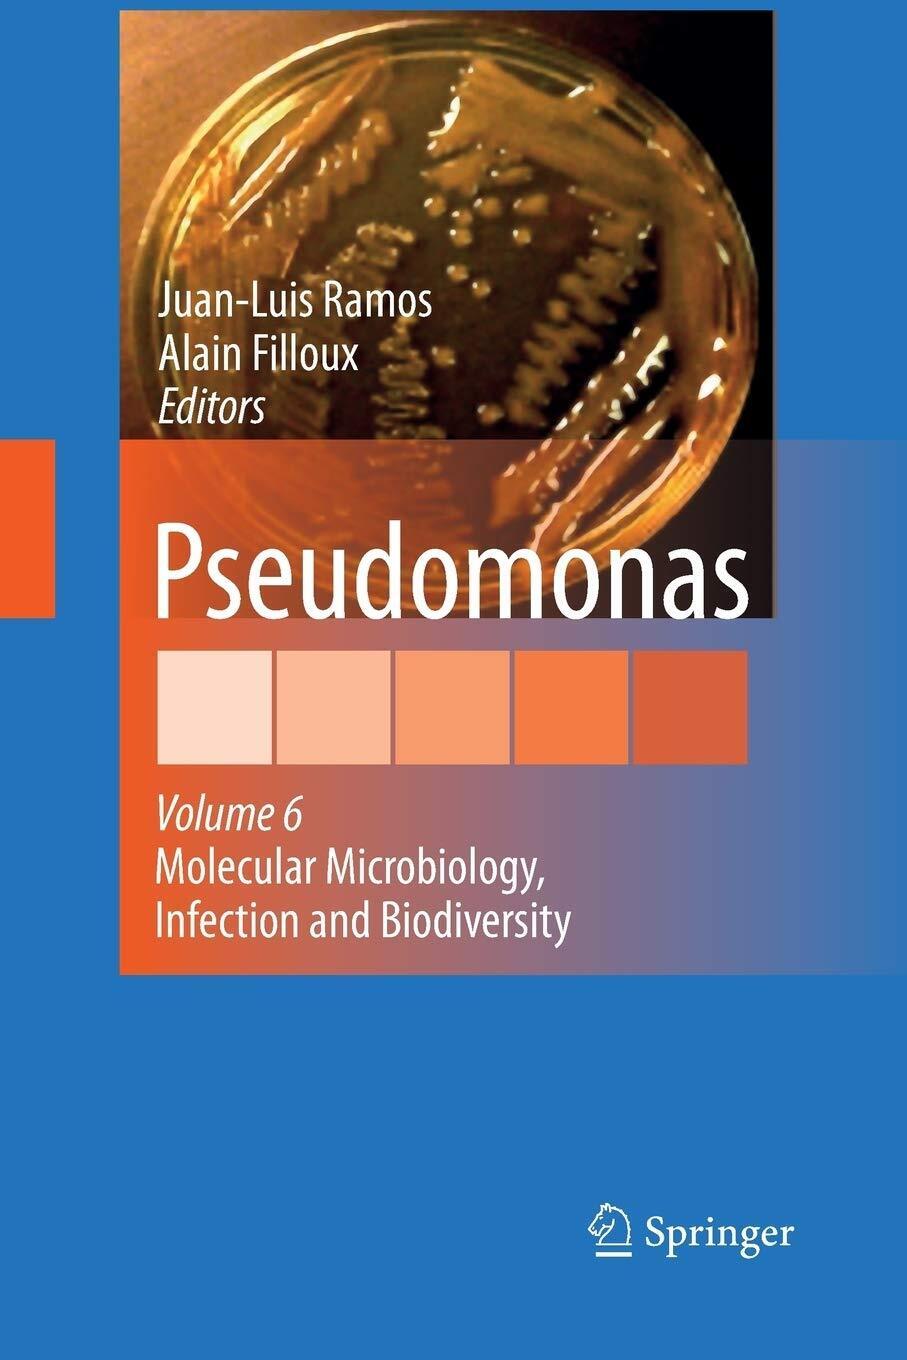 Pseudomonas - Juan L. Ramos - Springer, 2014